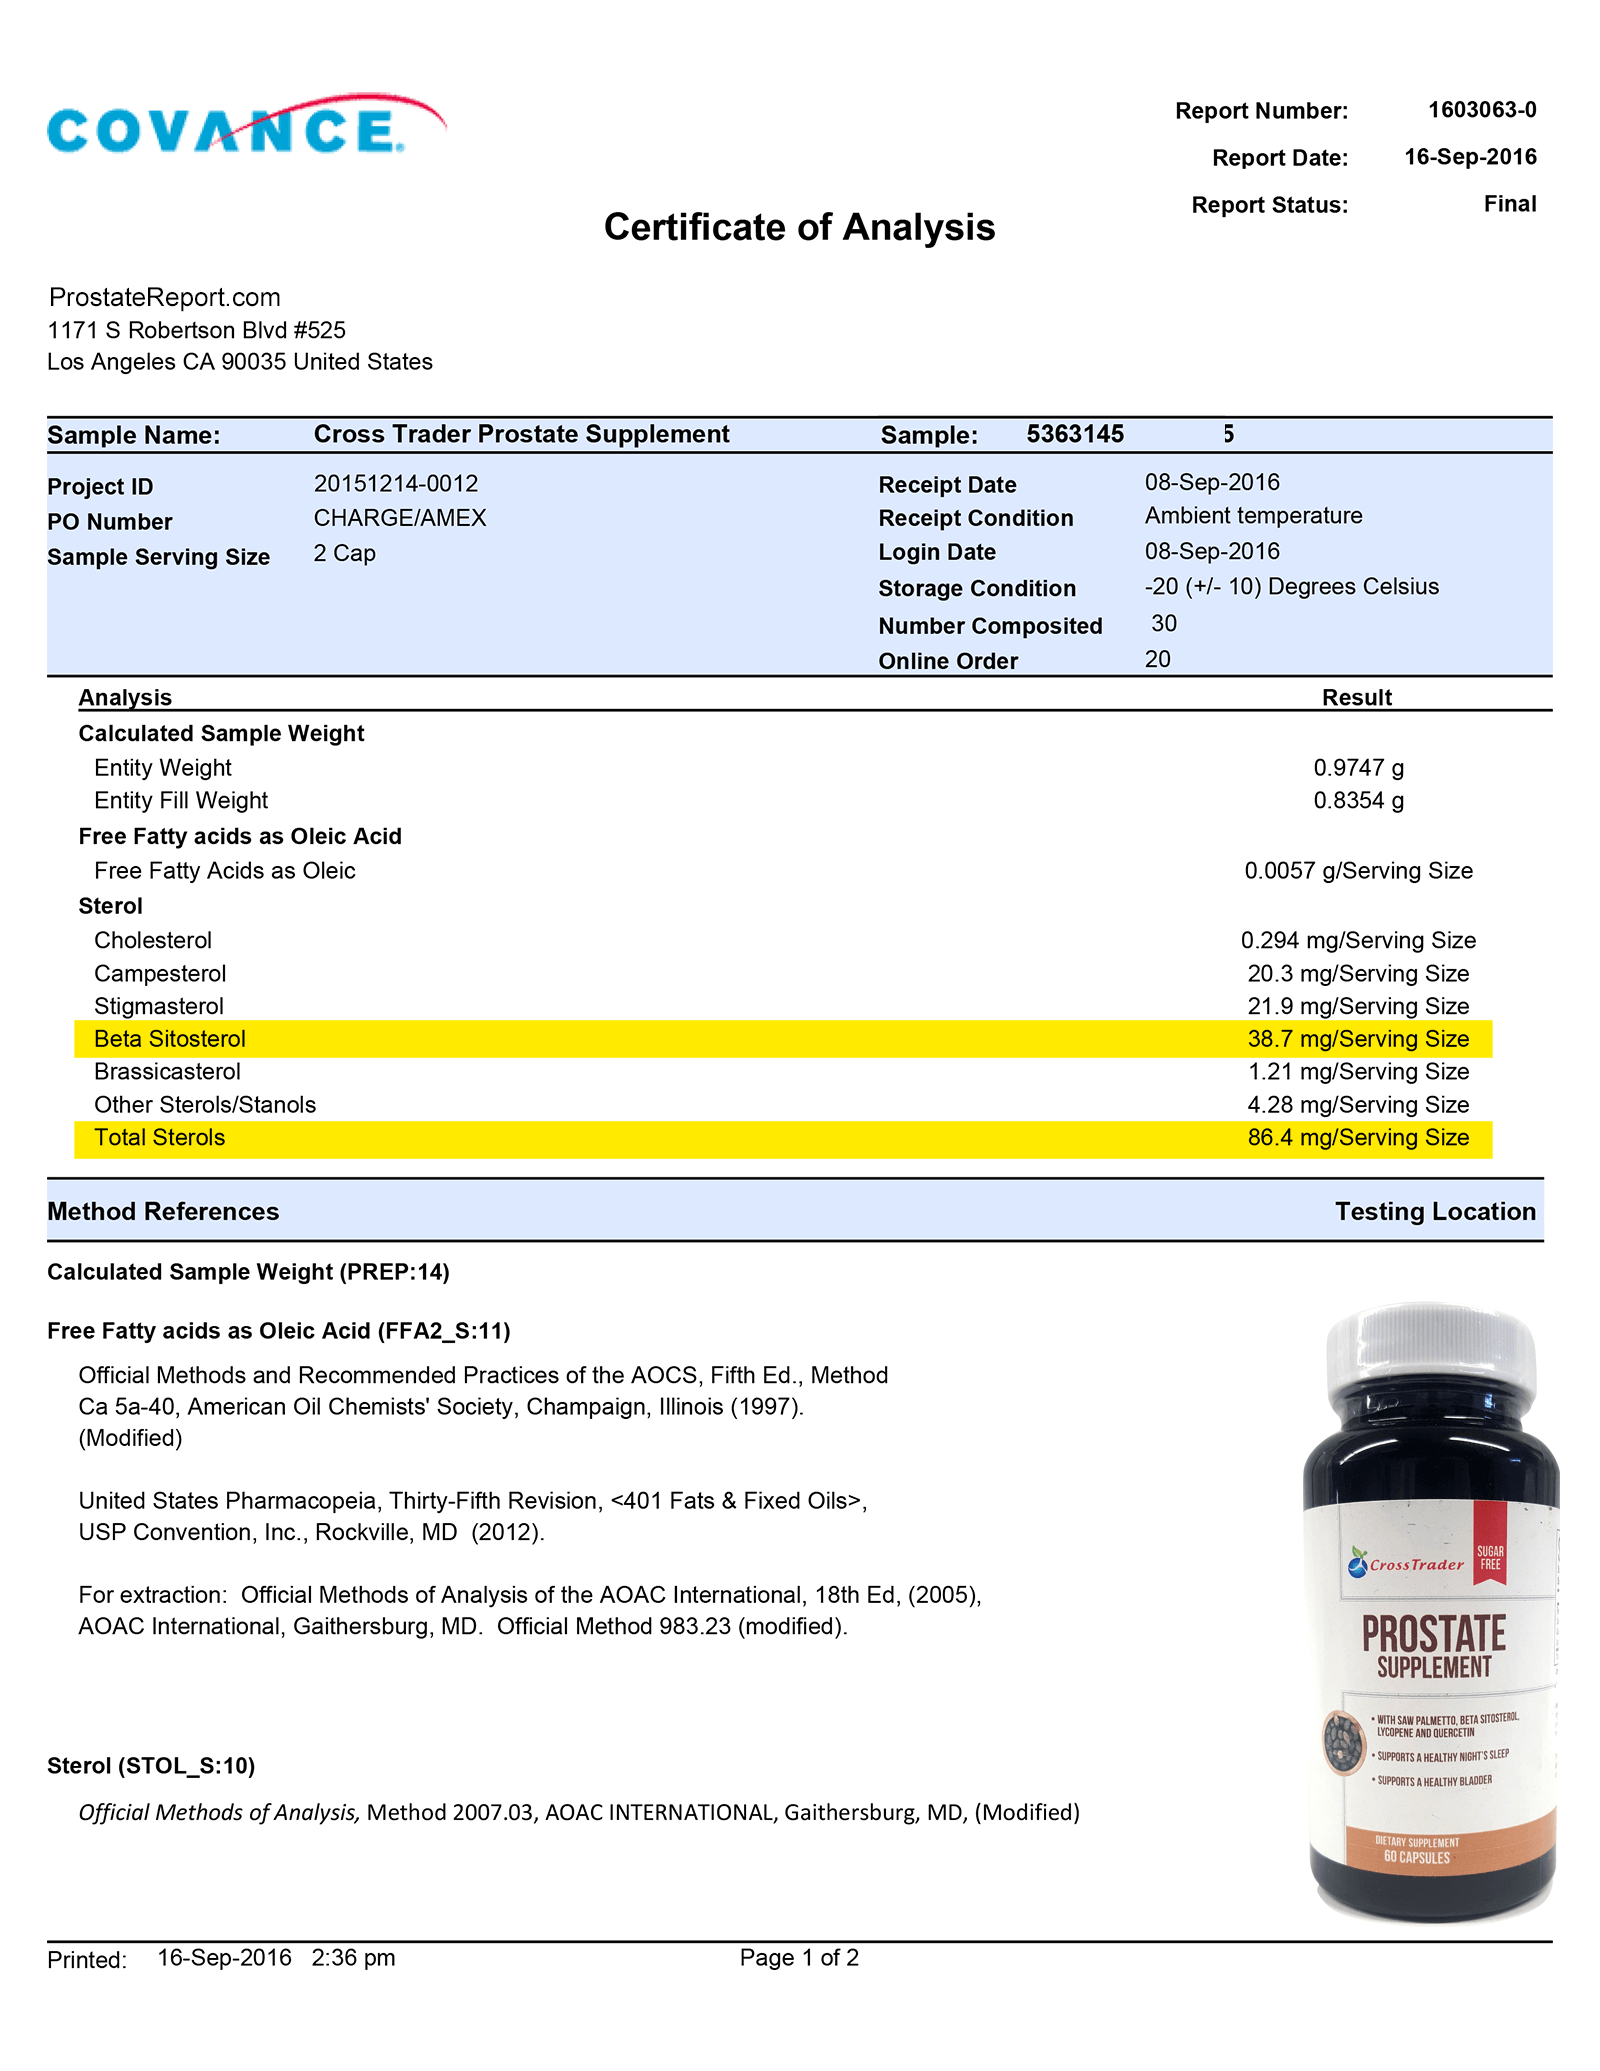 Prostate Supplement lab report